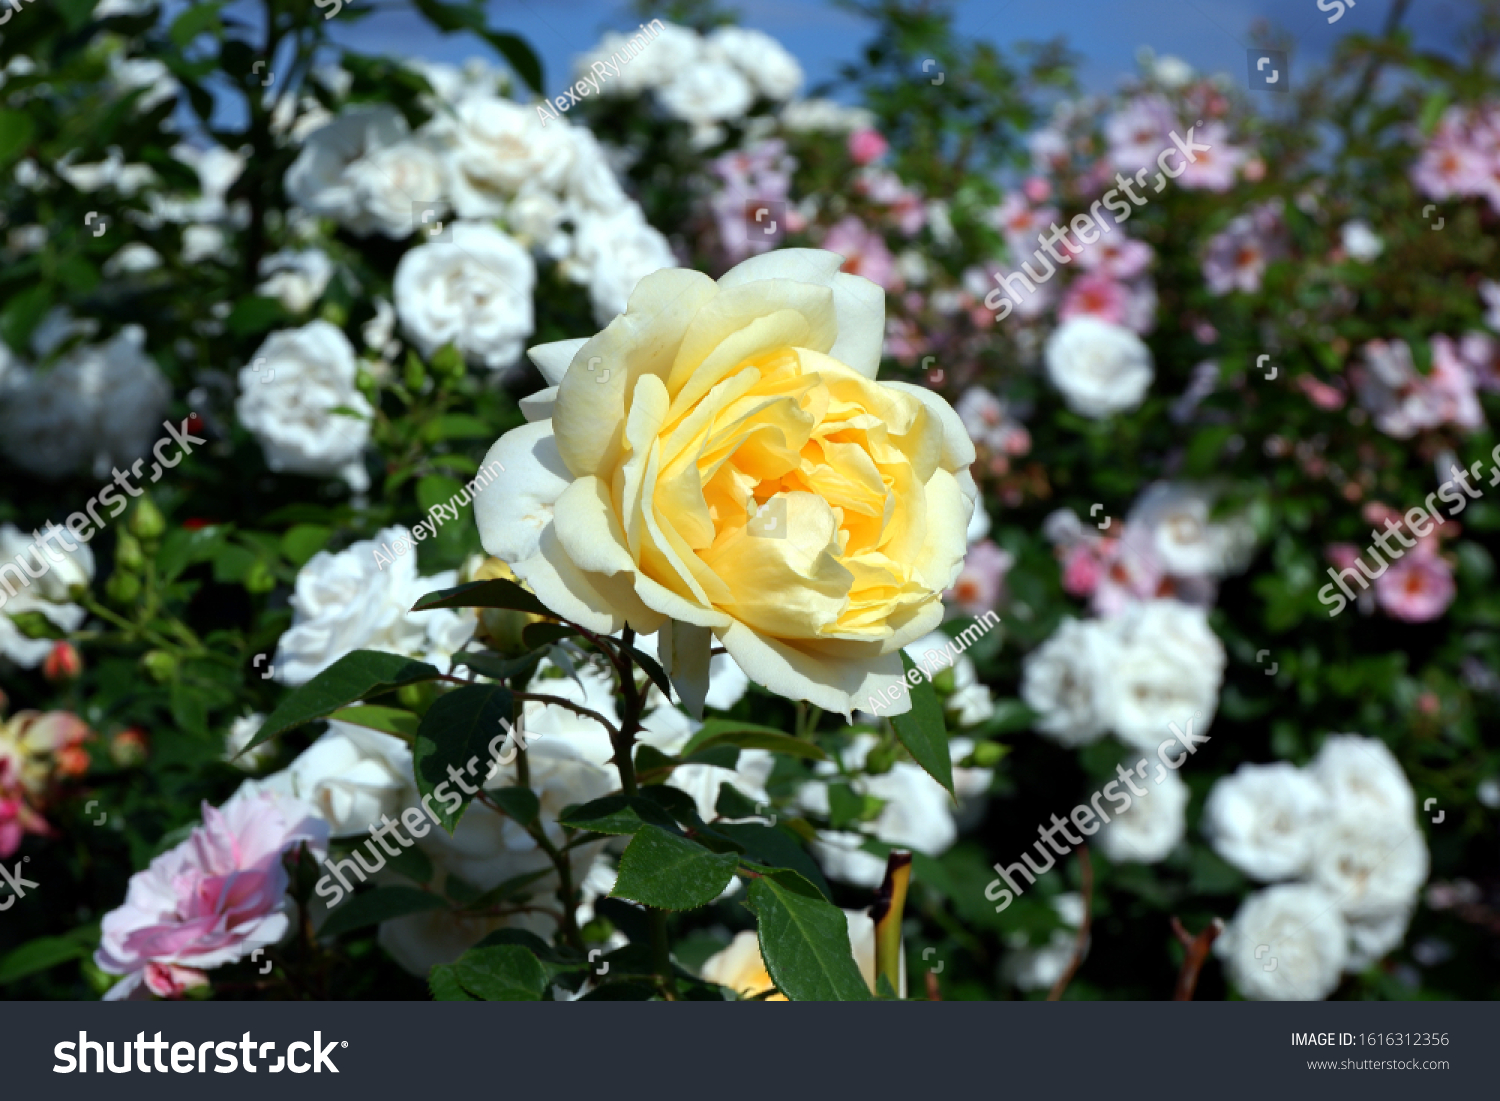 Single yellow rose on rose bush closeup view